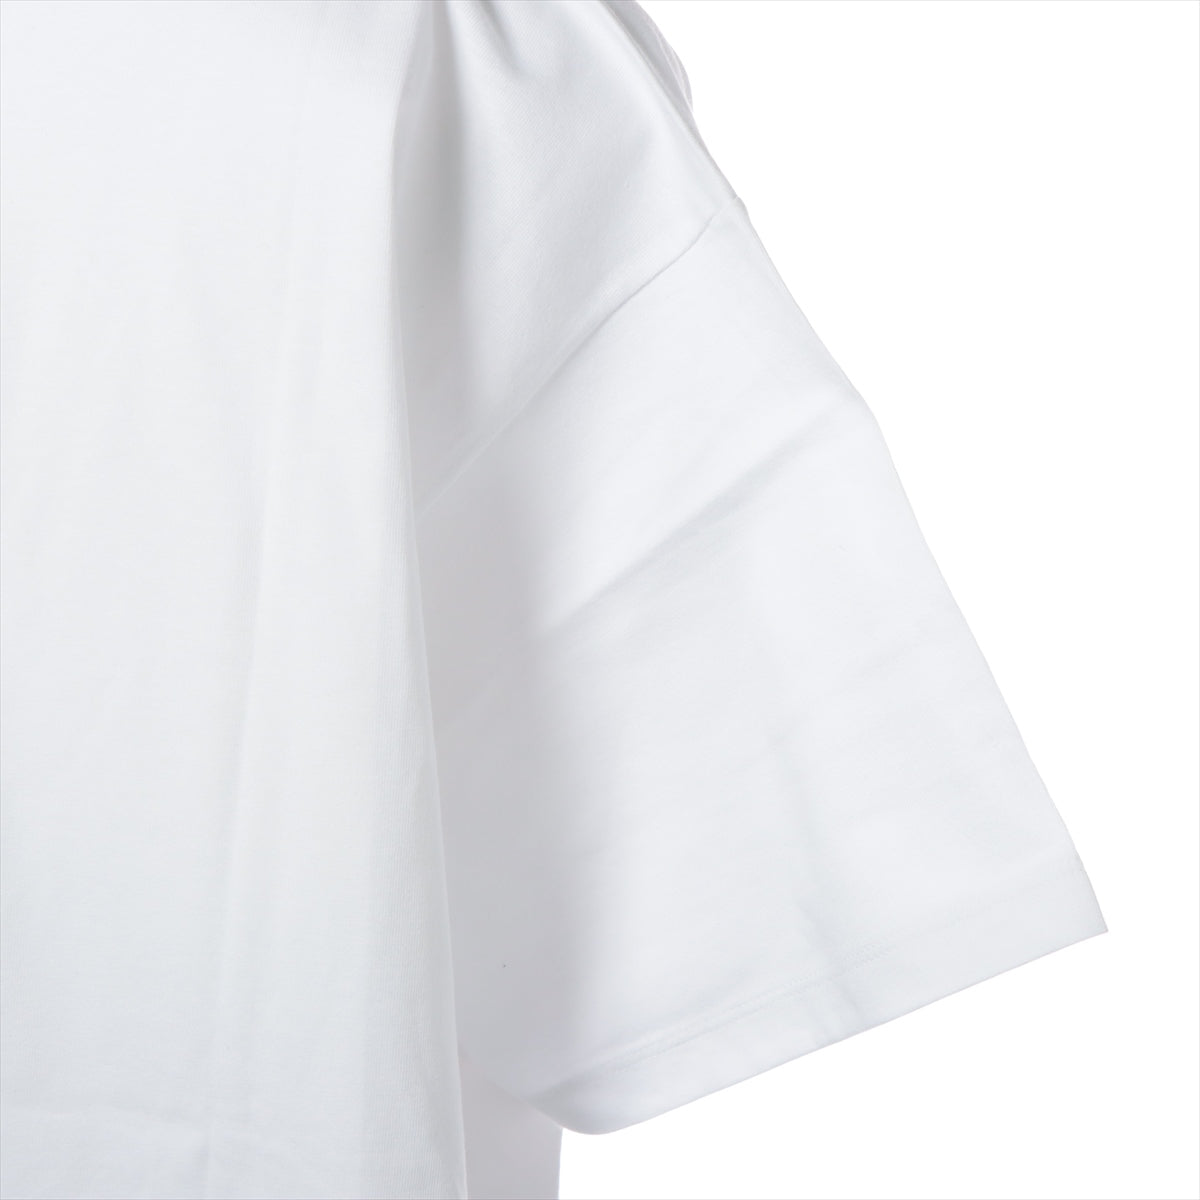 Gucci x adidas Cotton T-shirt M Ladies' White  723384